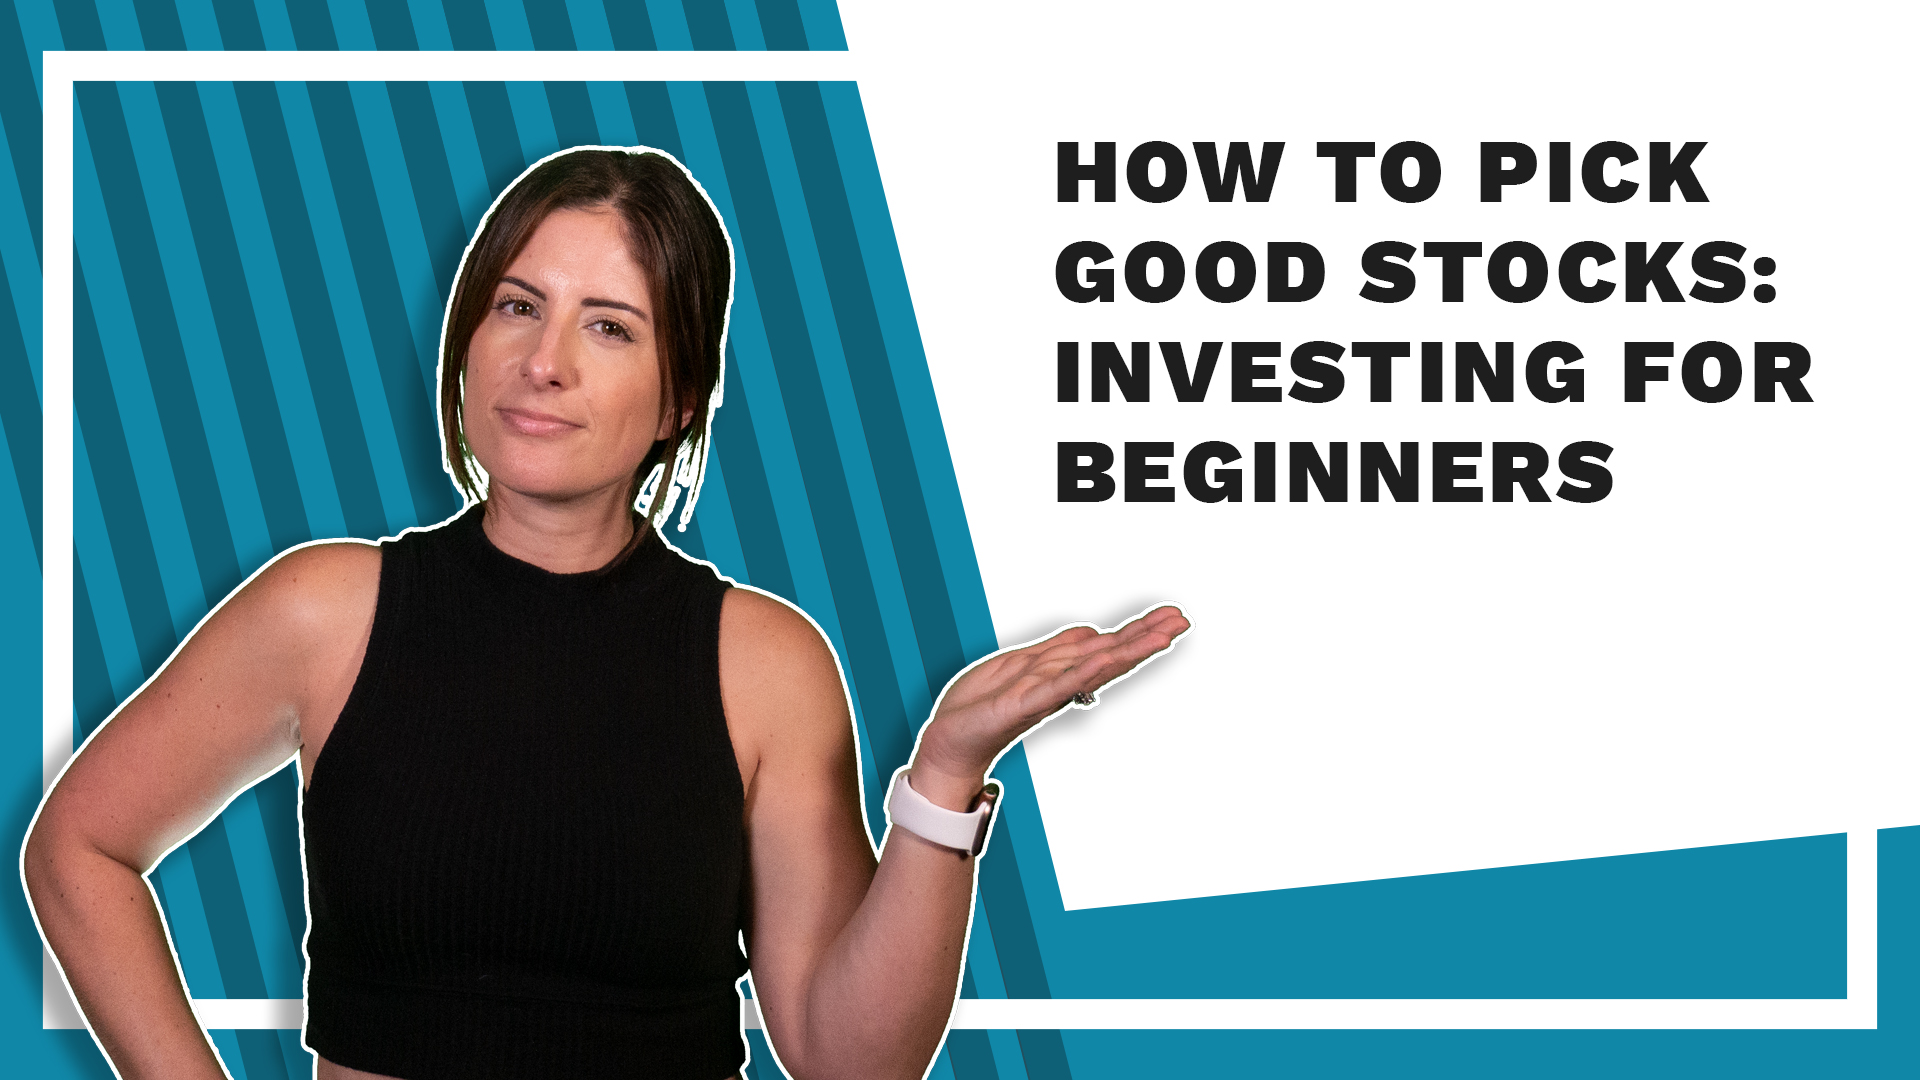 How To Pick Good Stocks Investing For Beginners She Talks Finance 0662